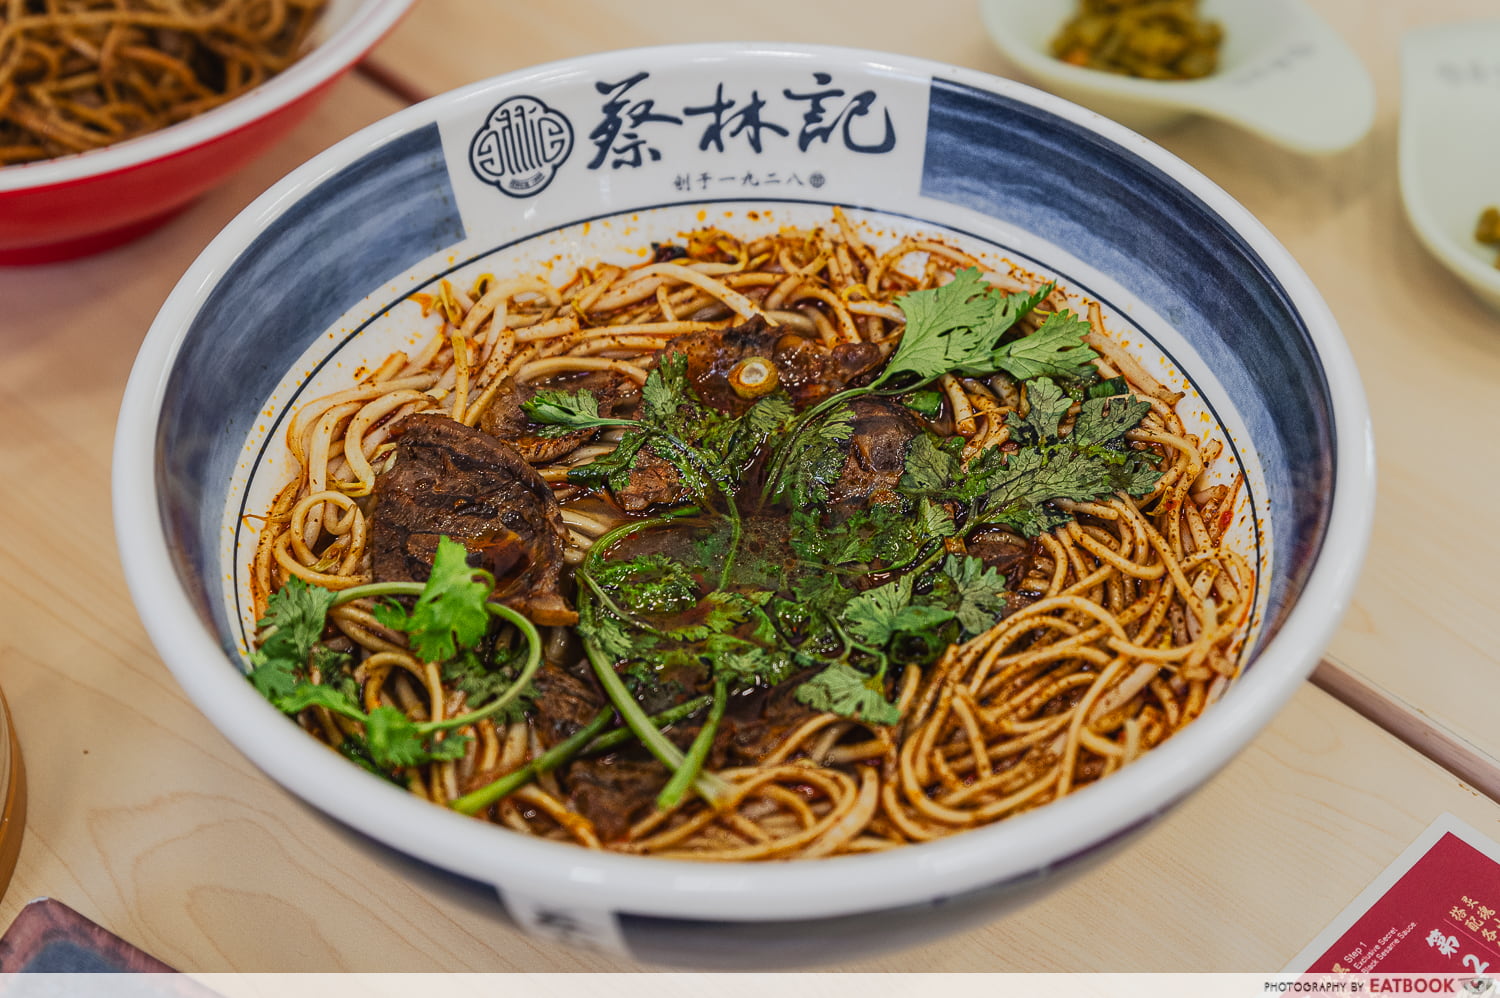 beef-noodles-cai-lin-ji